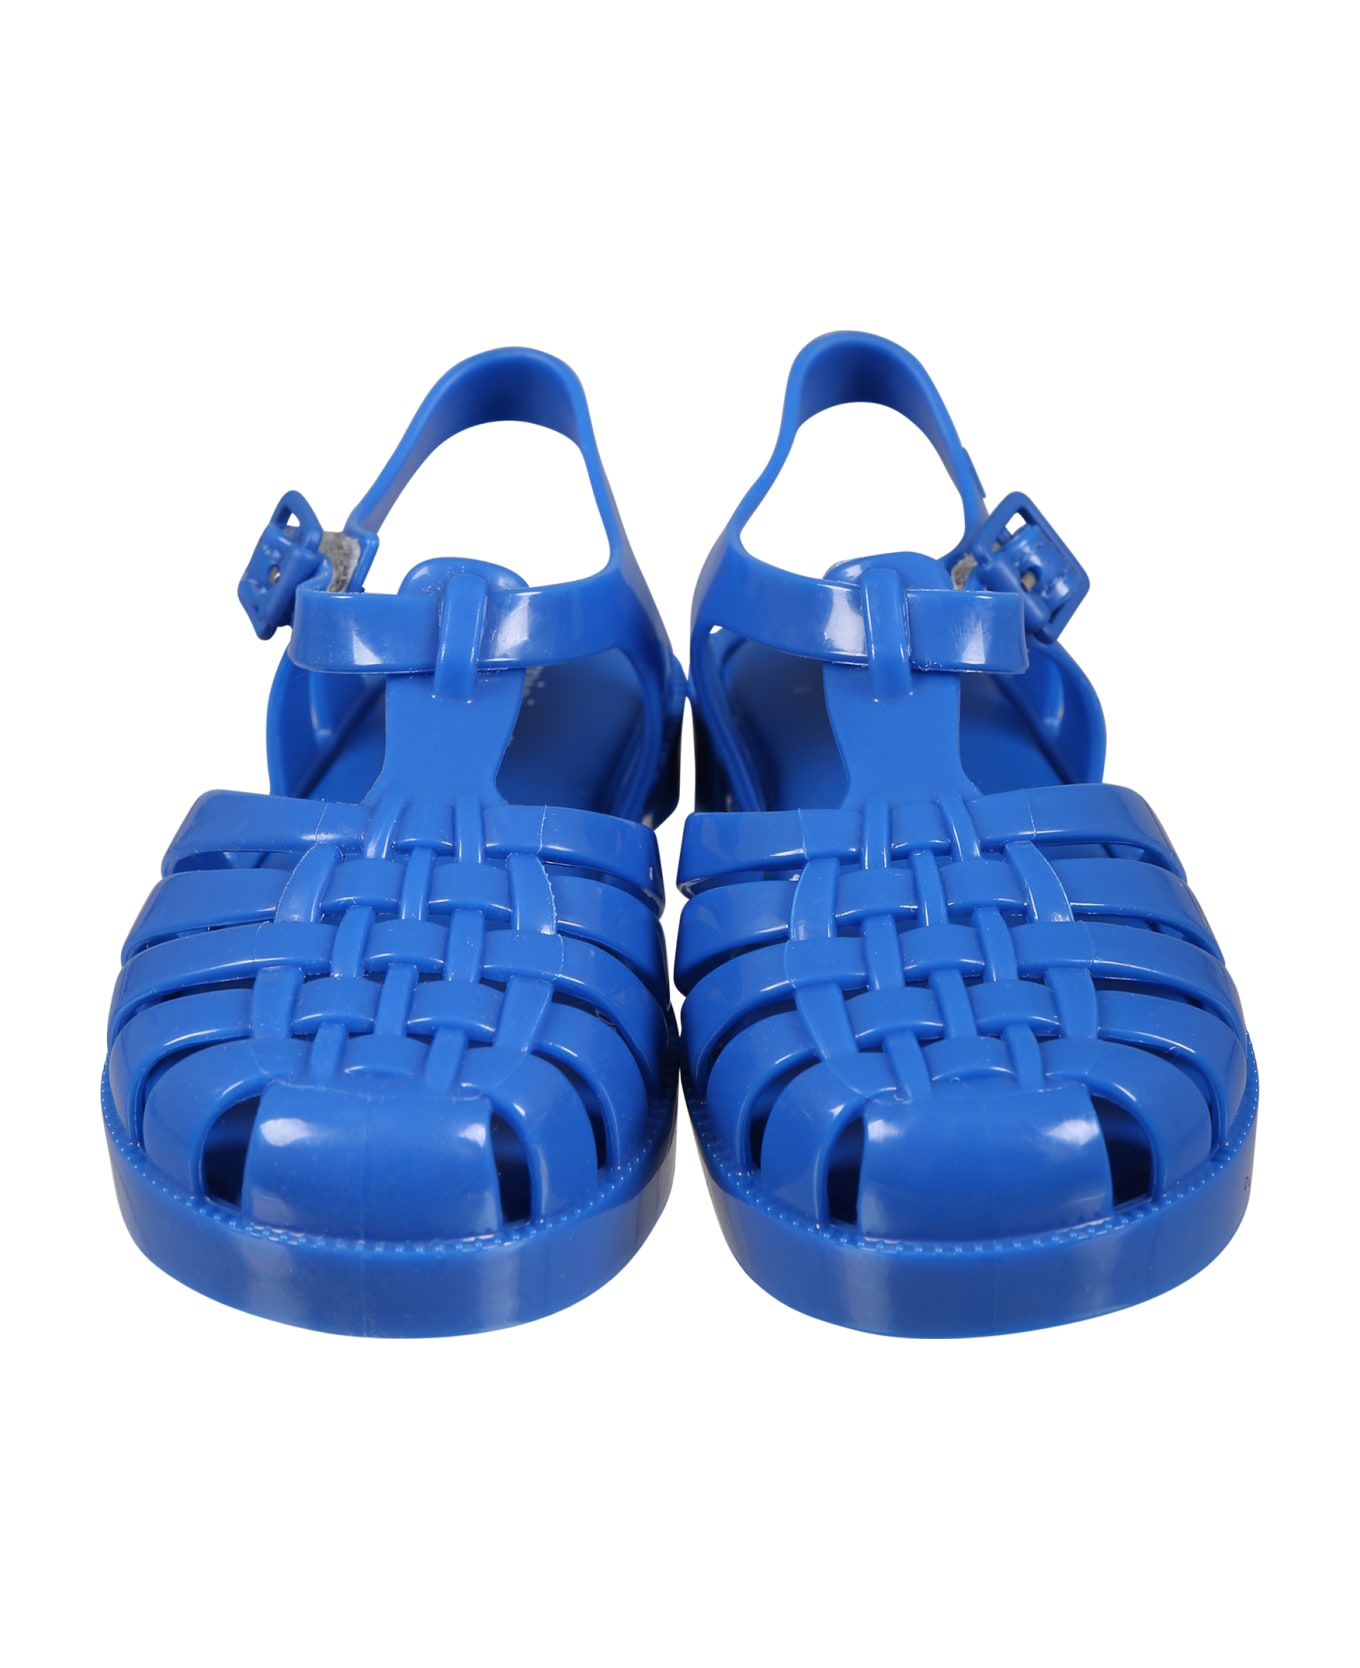 Melissa Blue Sandals For Kids With Logo - Blue